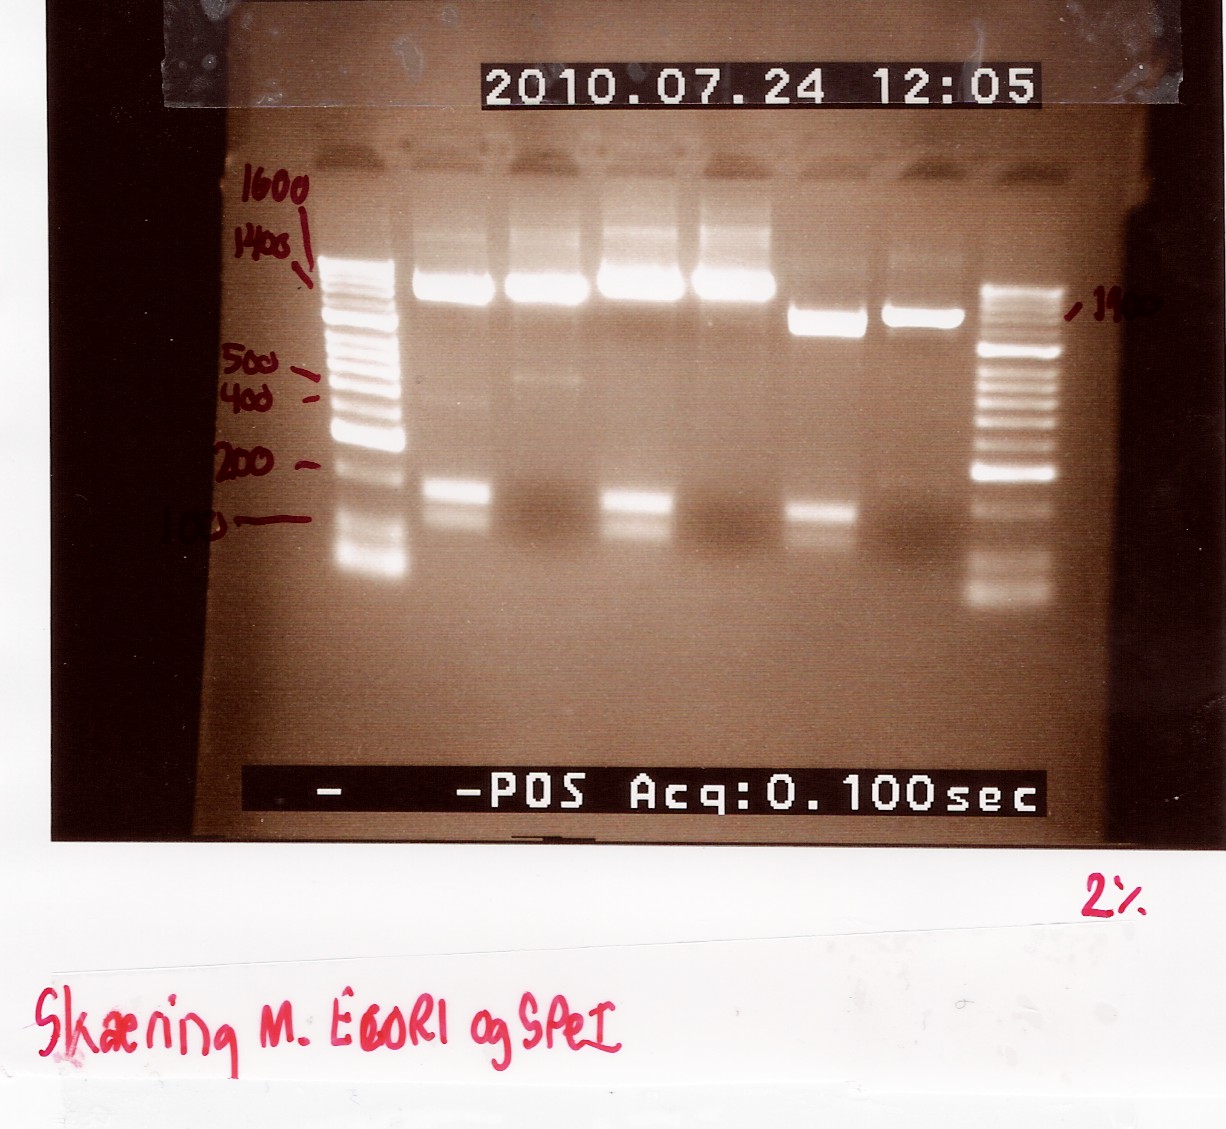 Team-SDU-Denmark-Digestion of coloni PCR product-1.jpg